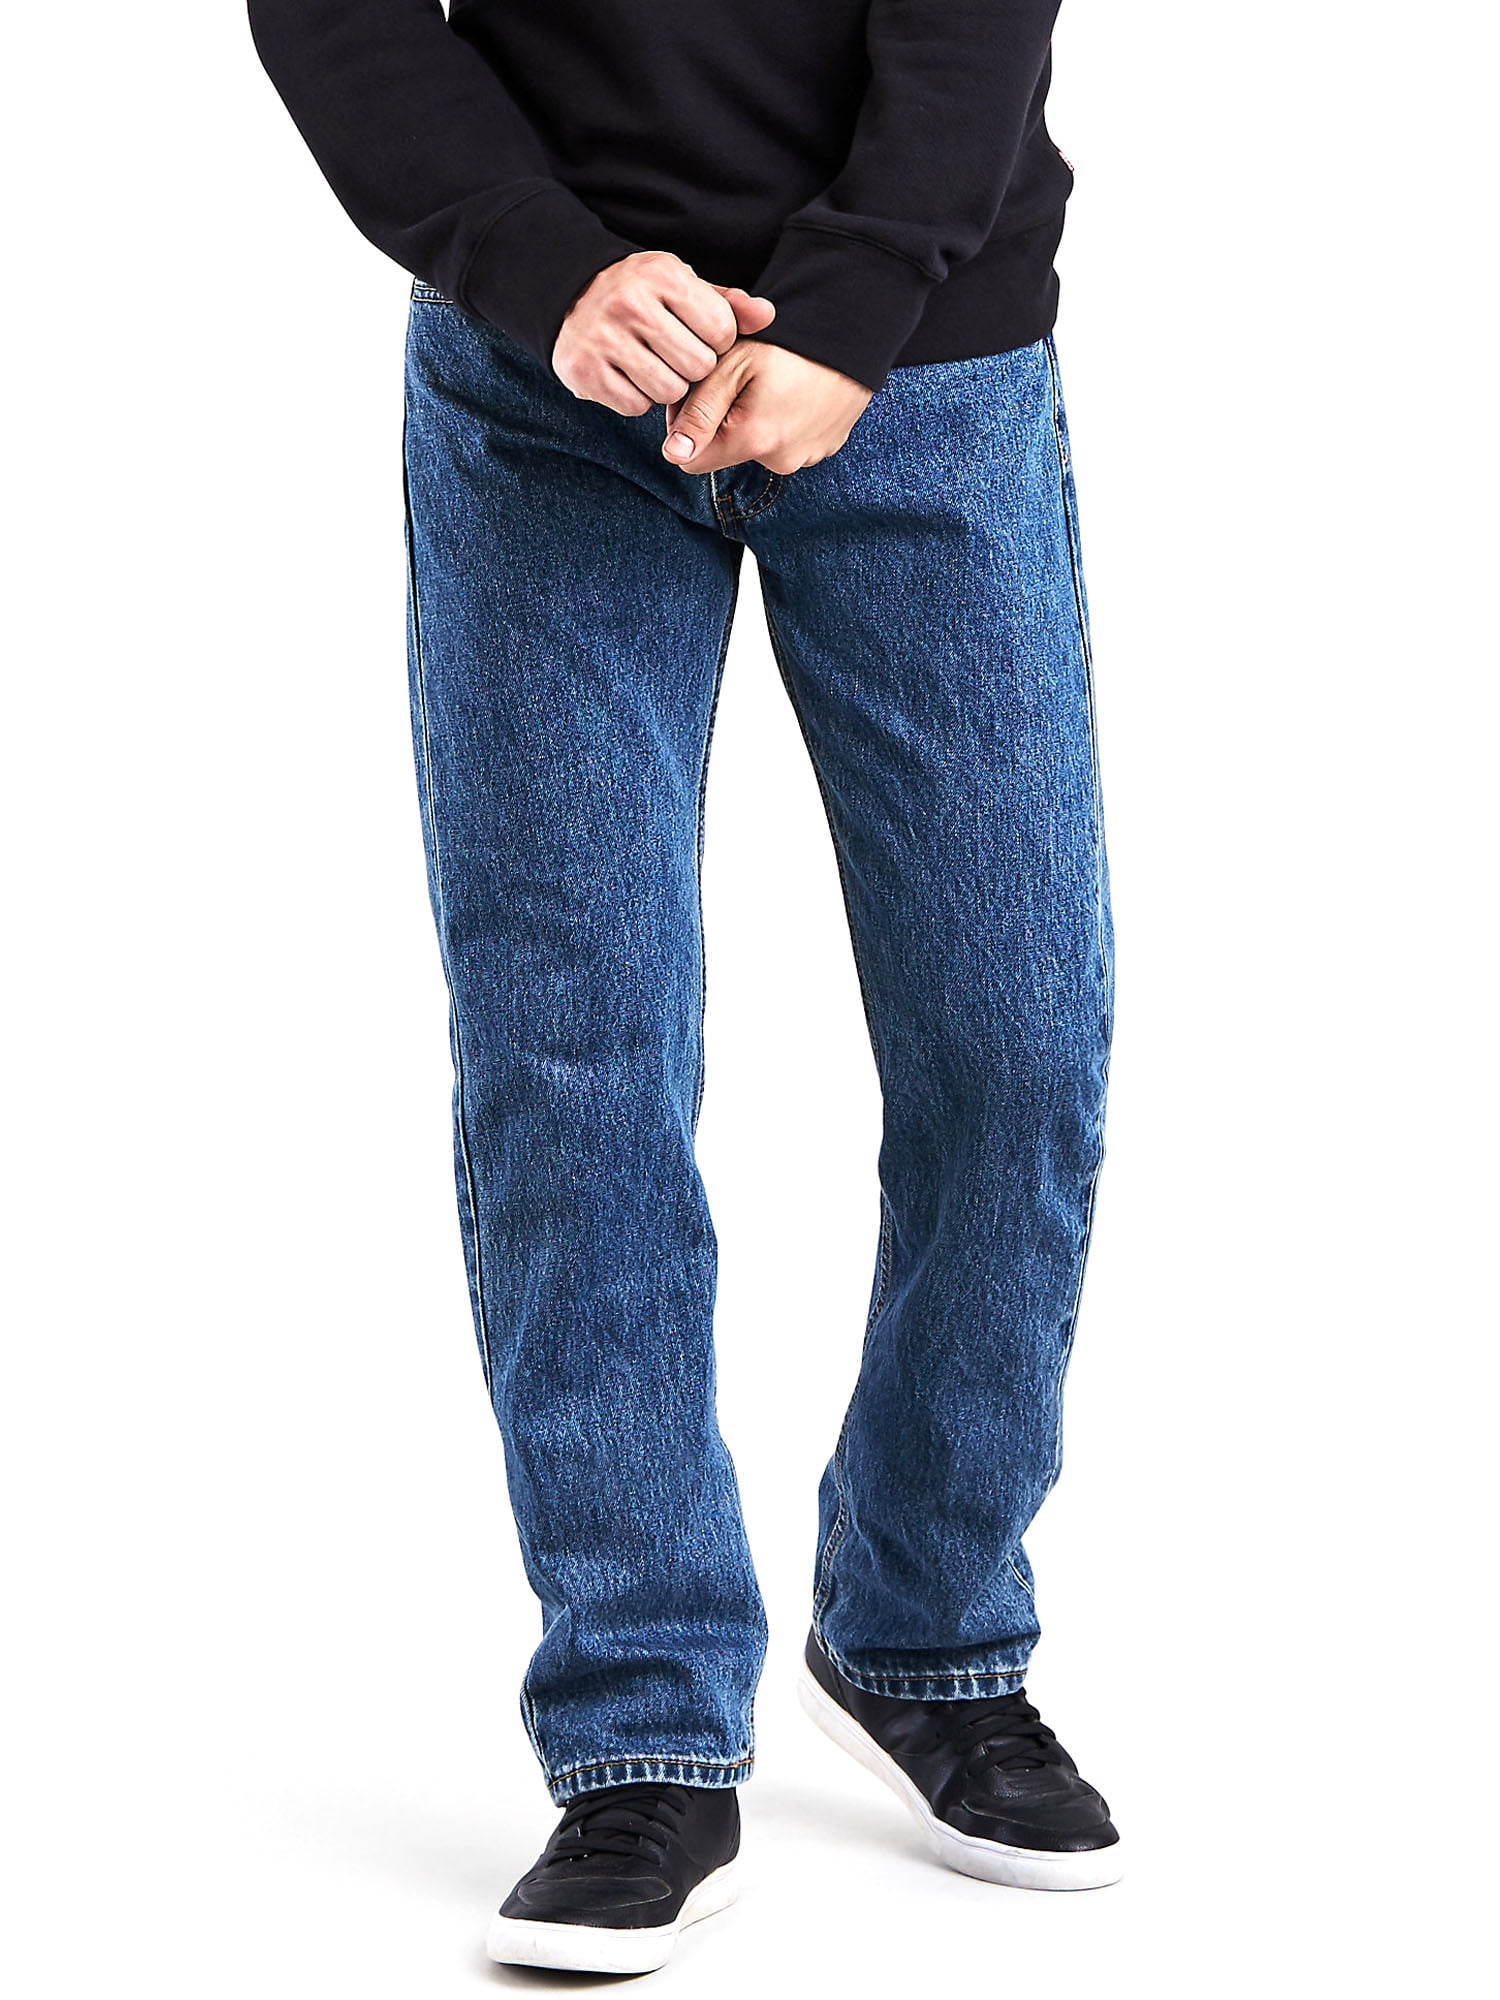 discount 67% Stradivarius straight jeans Blue 40                  EU WOMEN FASHION Jeans Straight jeans Worn-in 